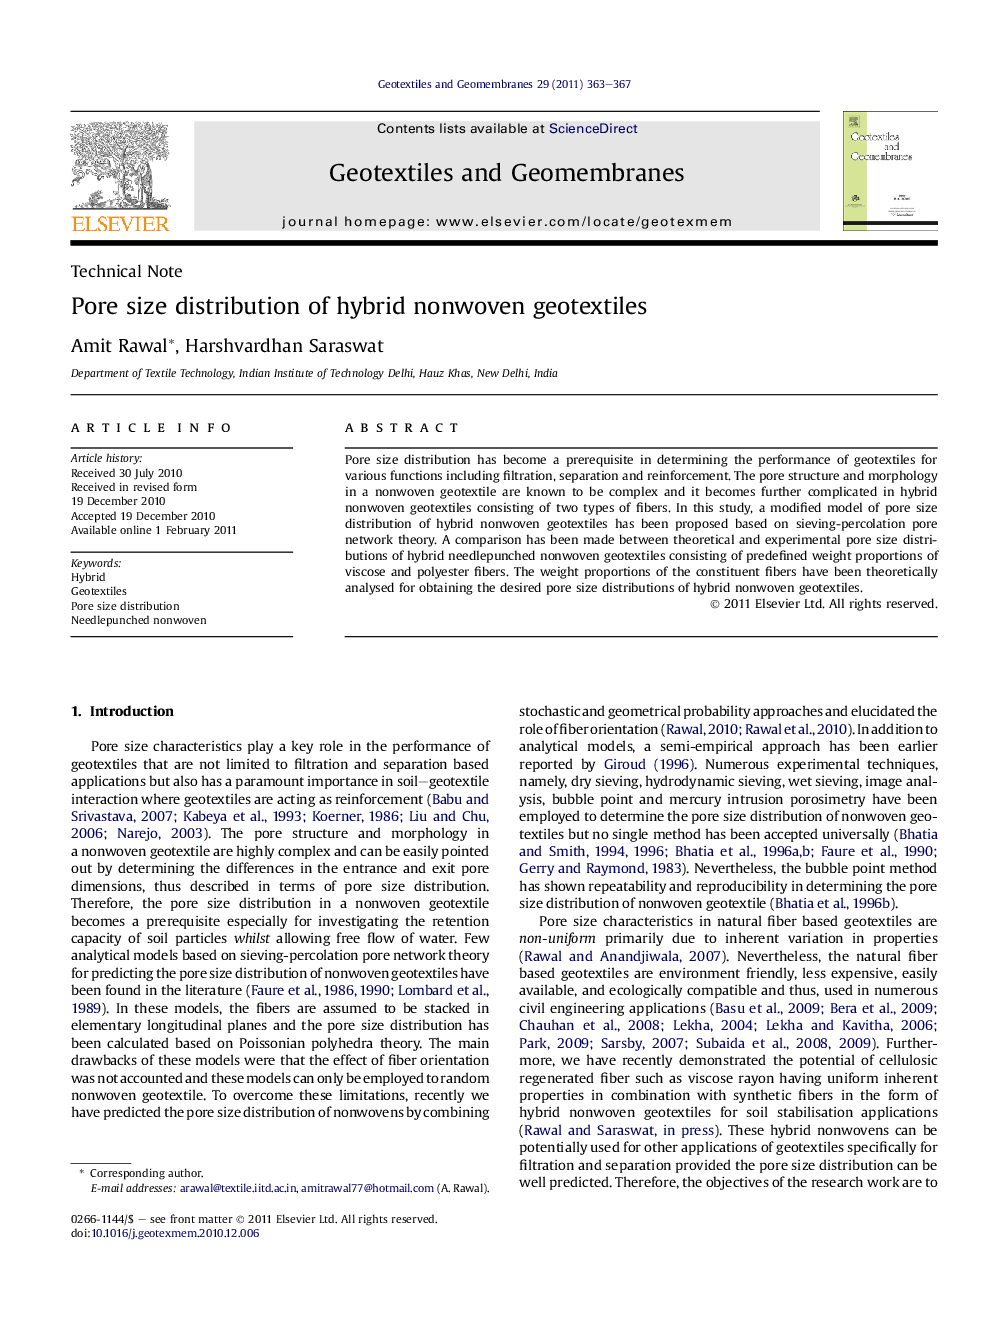 Pore size distribution of hybrid nonwoven geotextiles